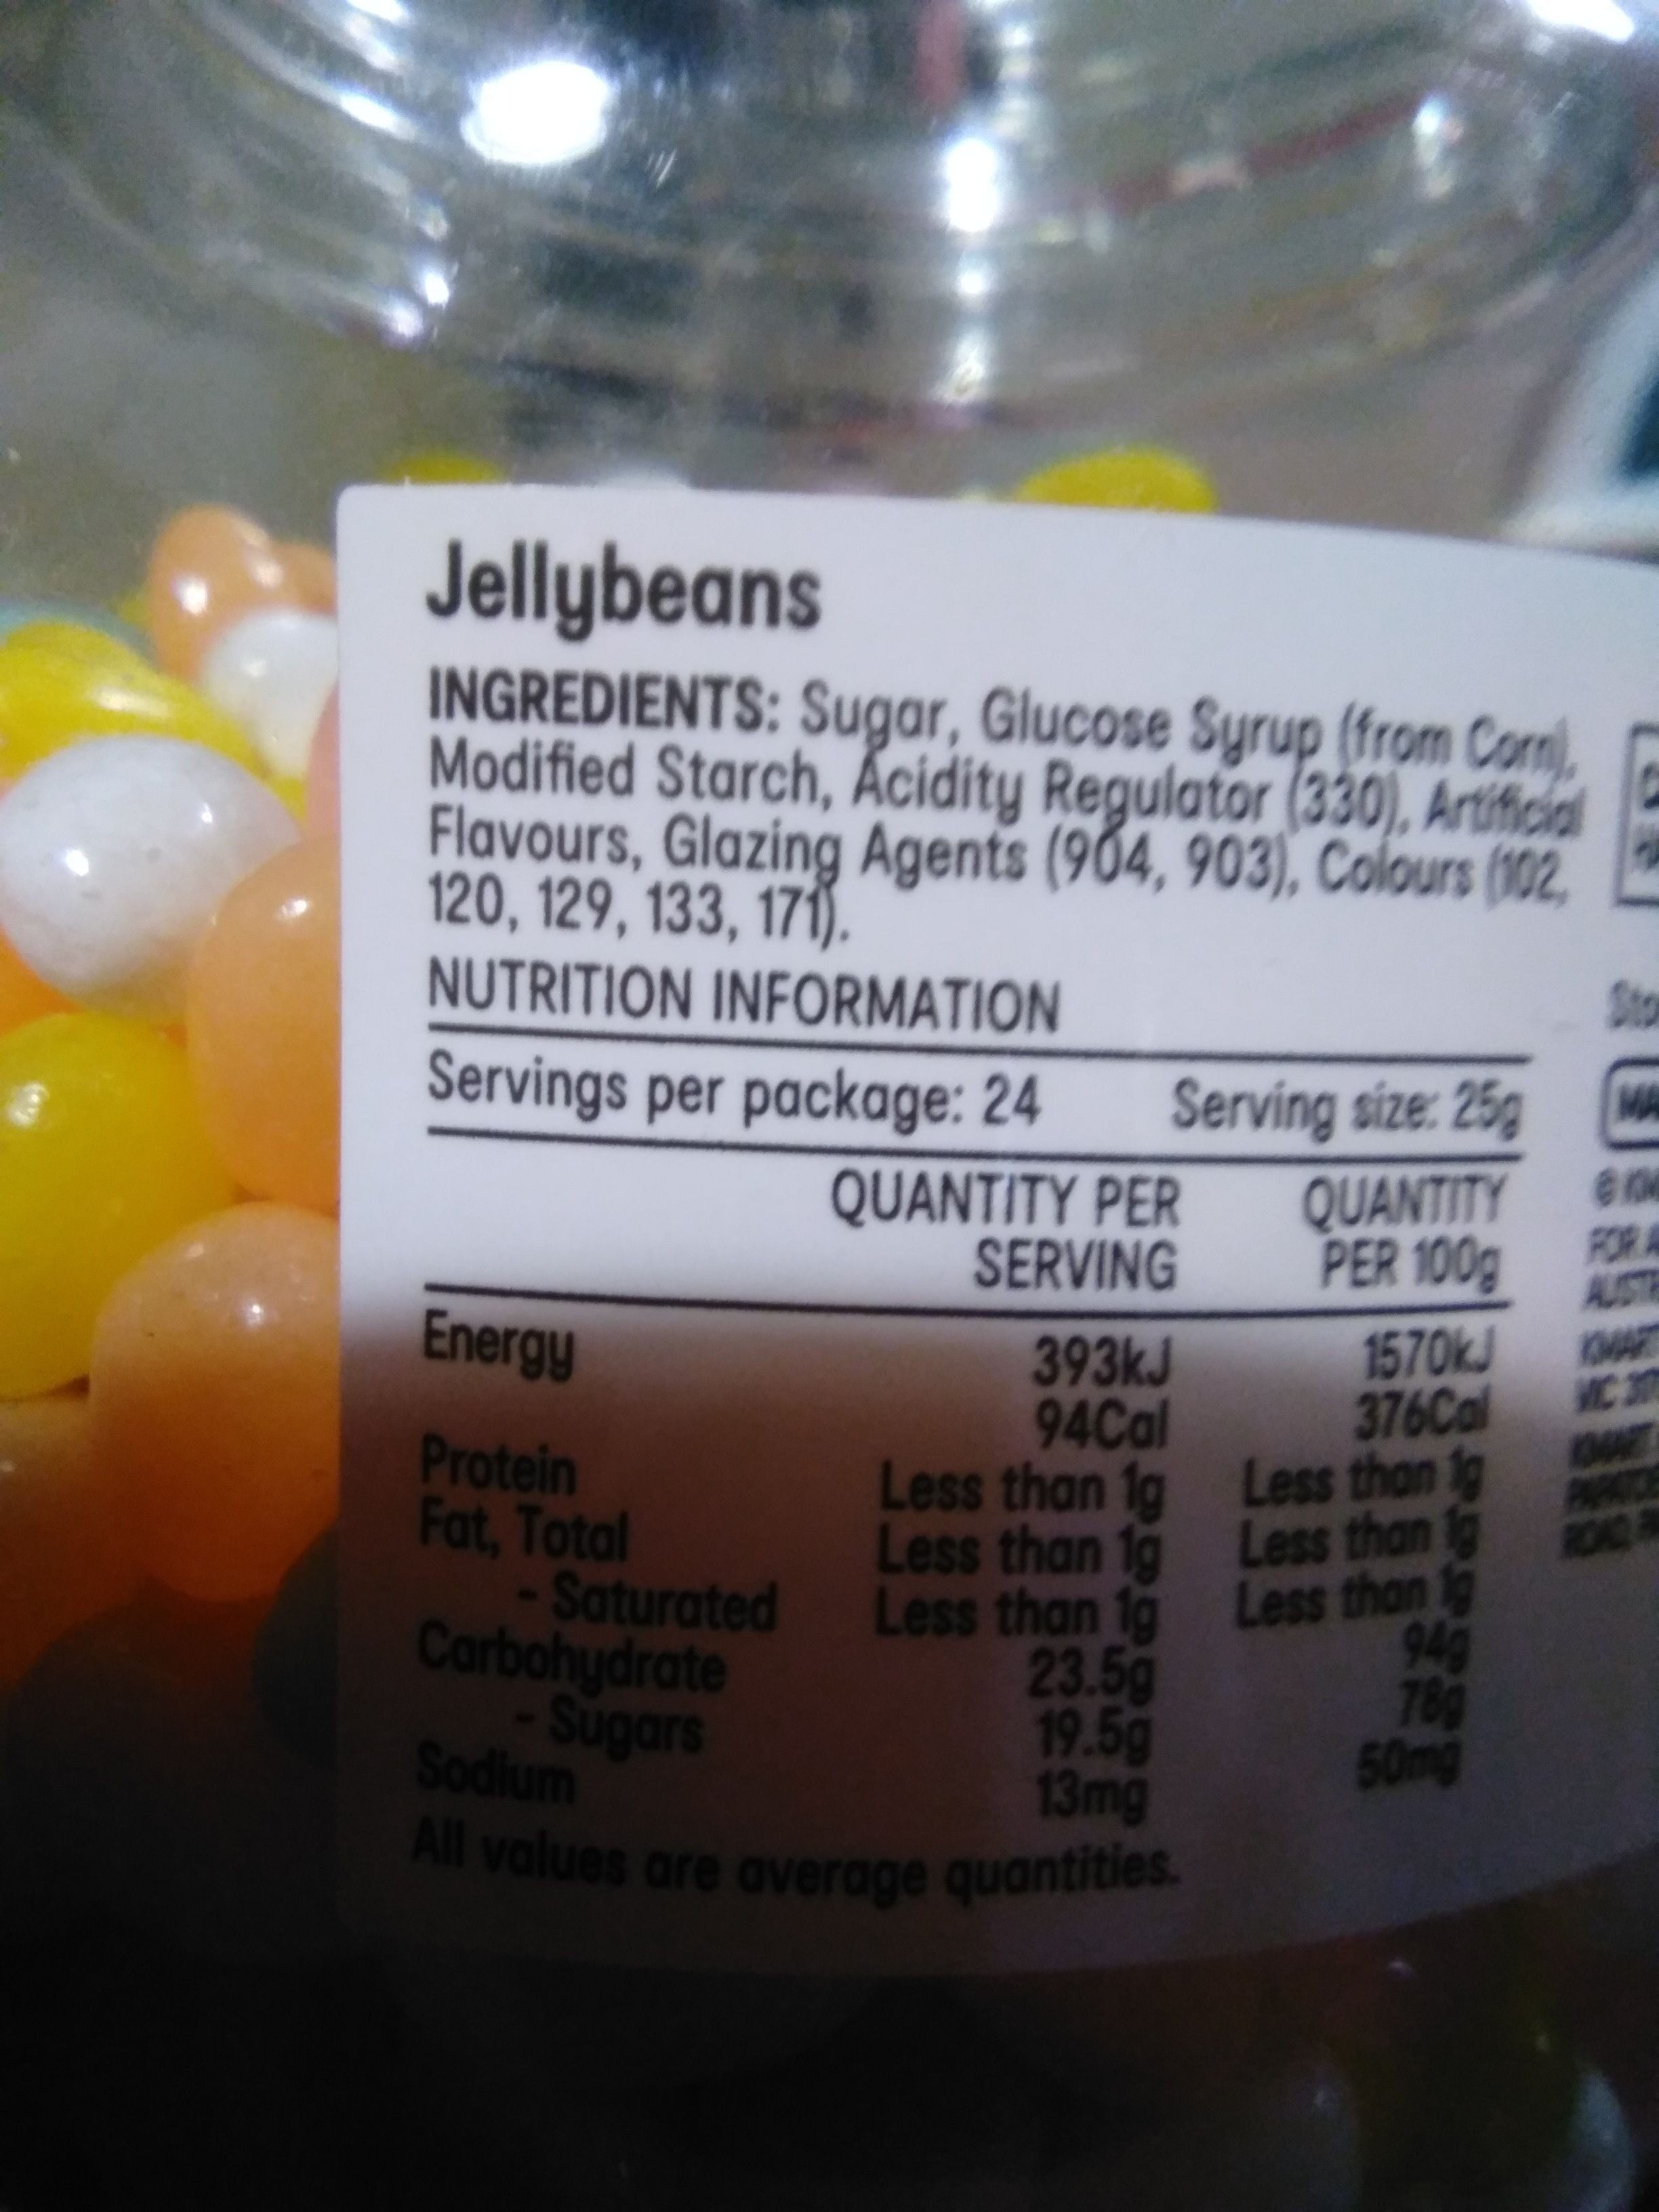 kmart jellybeans - Ingredients